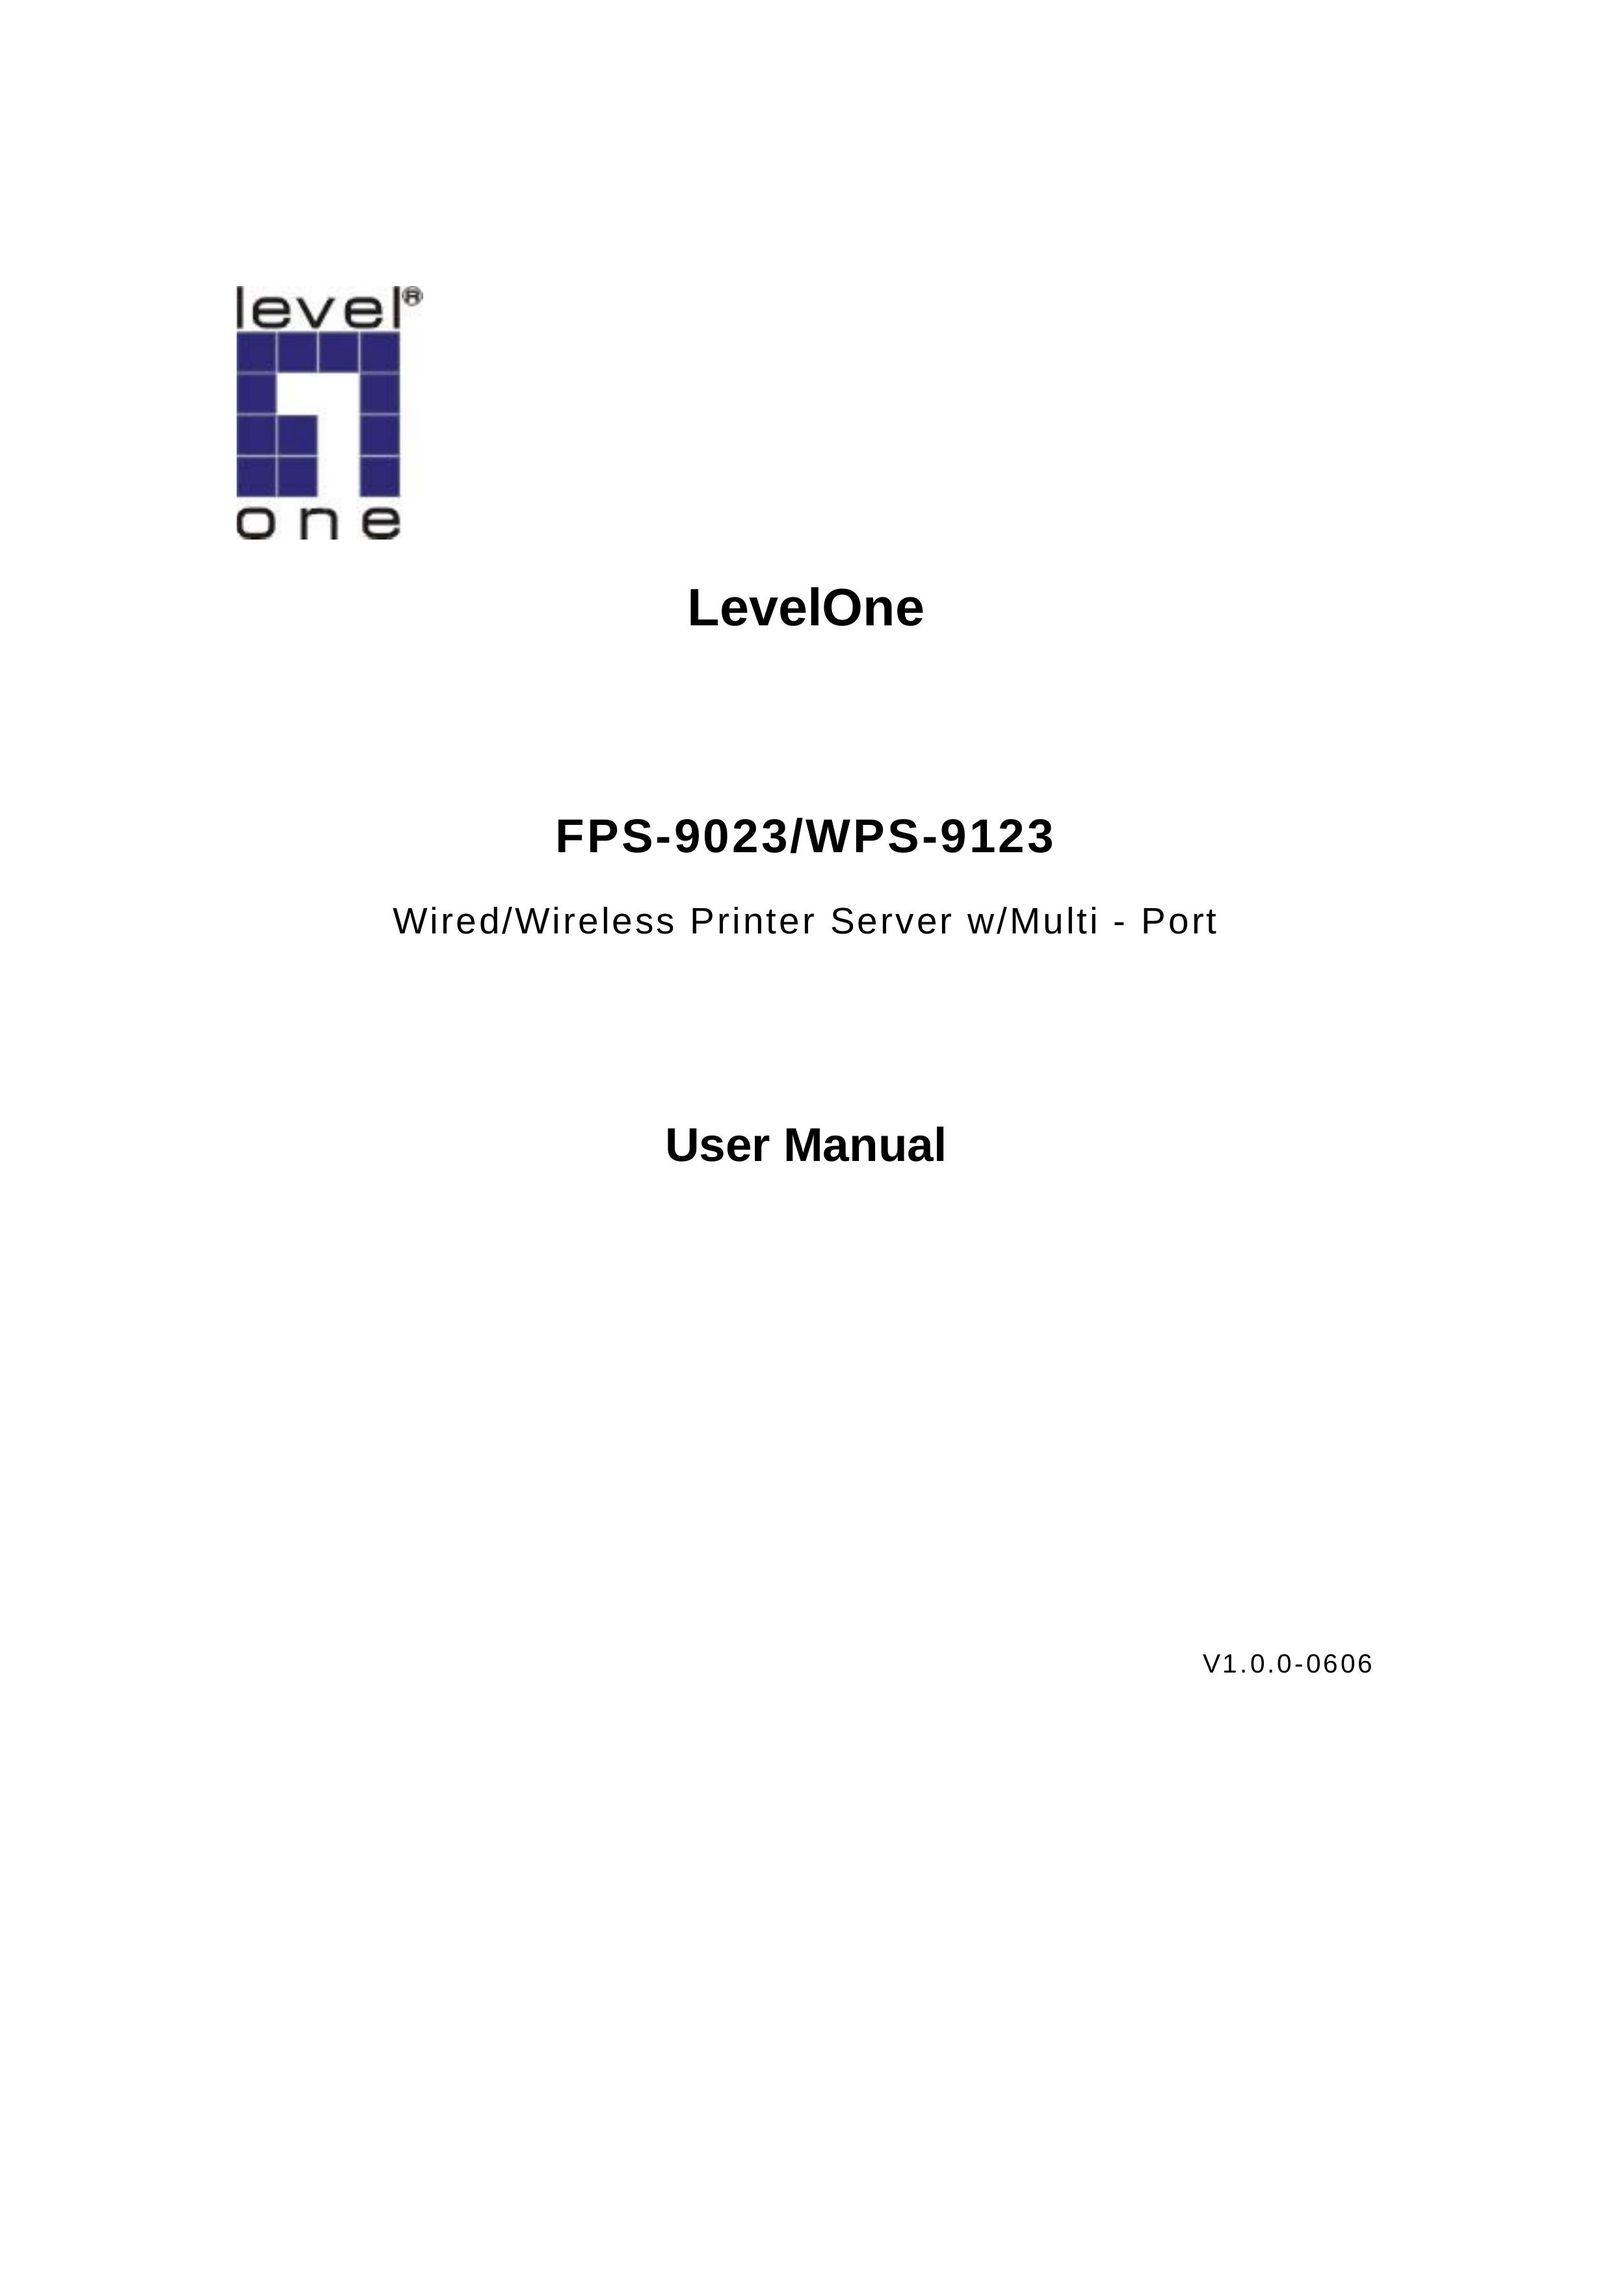 LevelOne WPS-9123 Printer User Manual